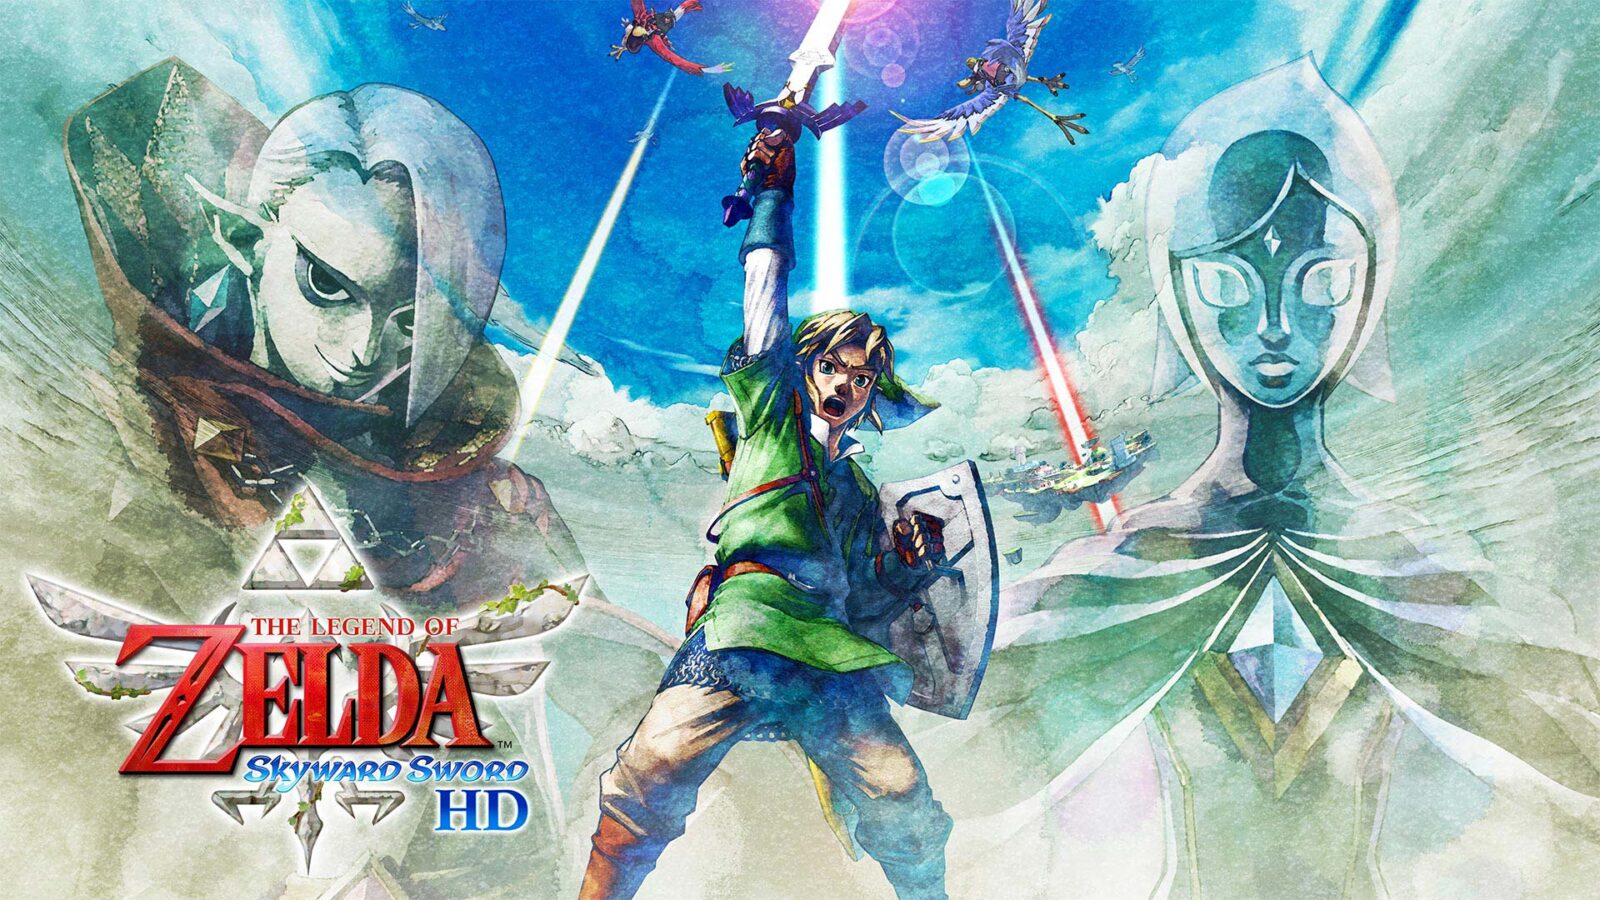 Link raising his sword skyward